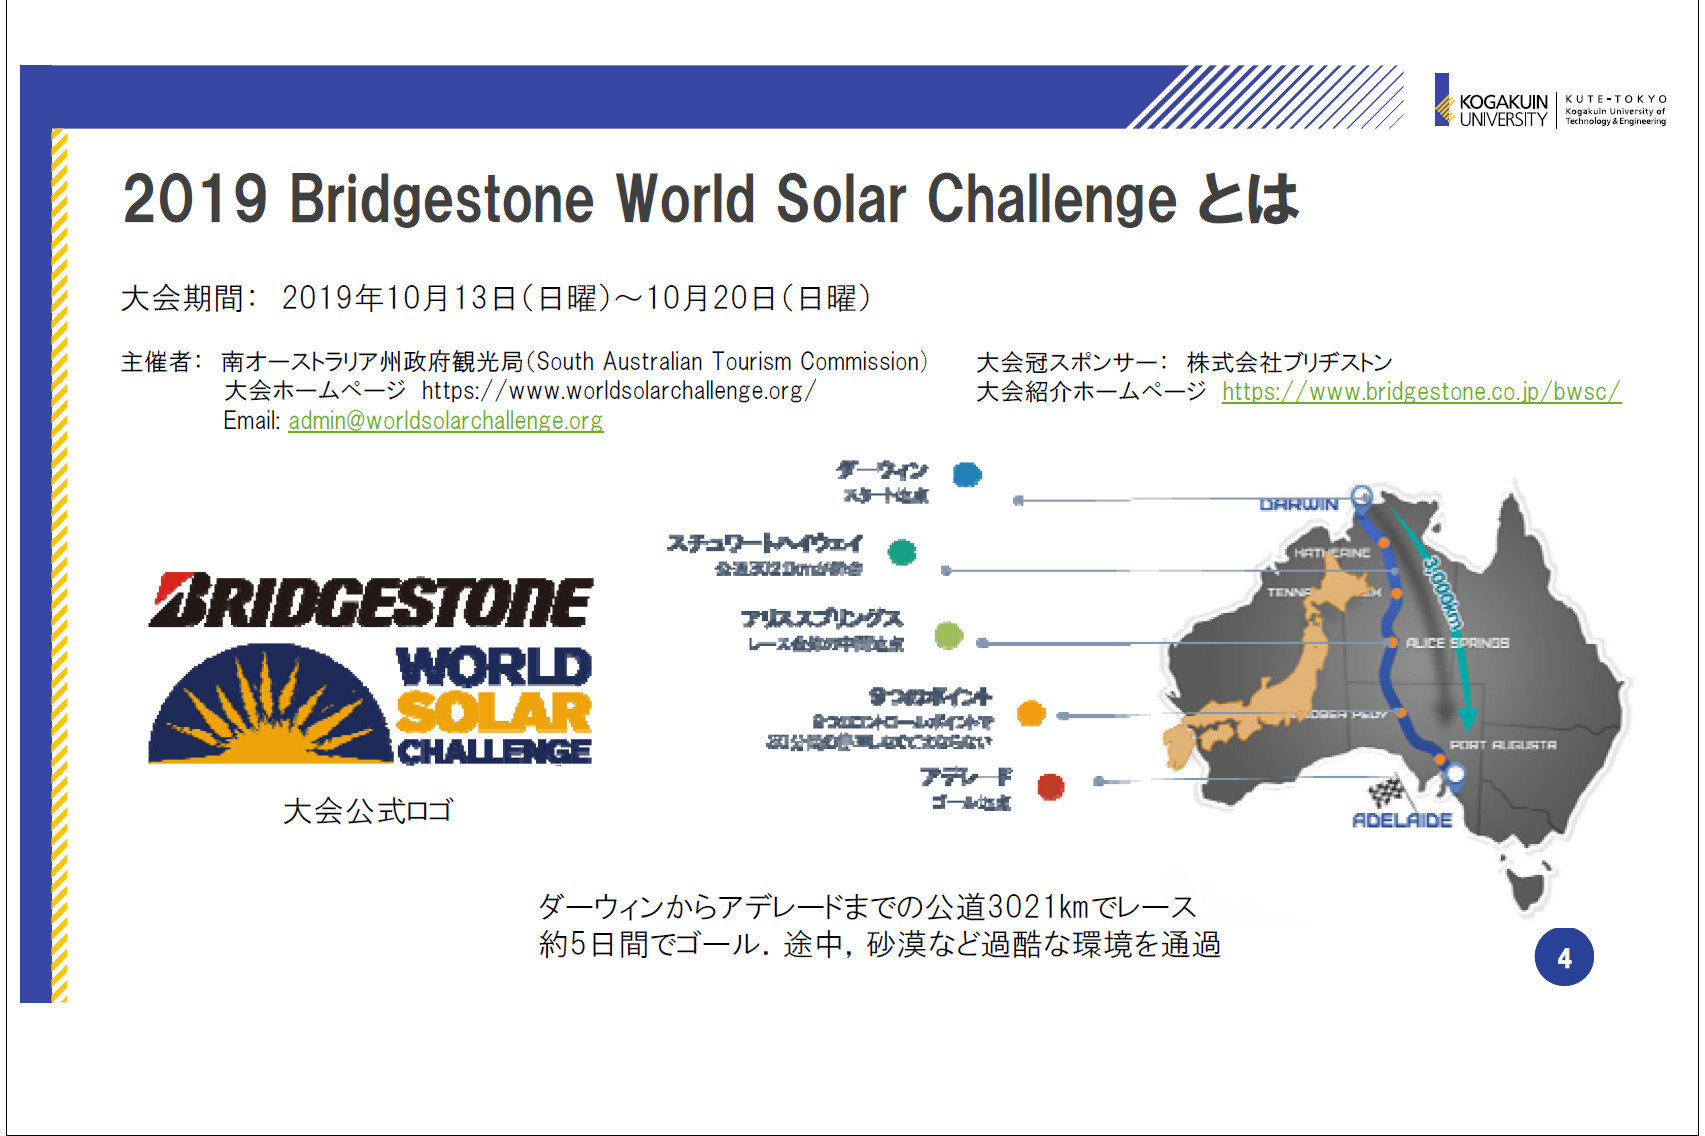  2019 Bridgestone World Solar Challenge̊TviNbNŊgj oTFHw@w